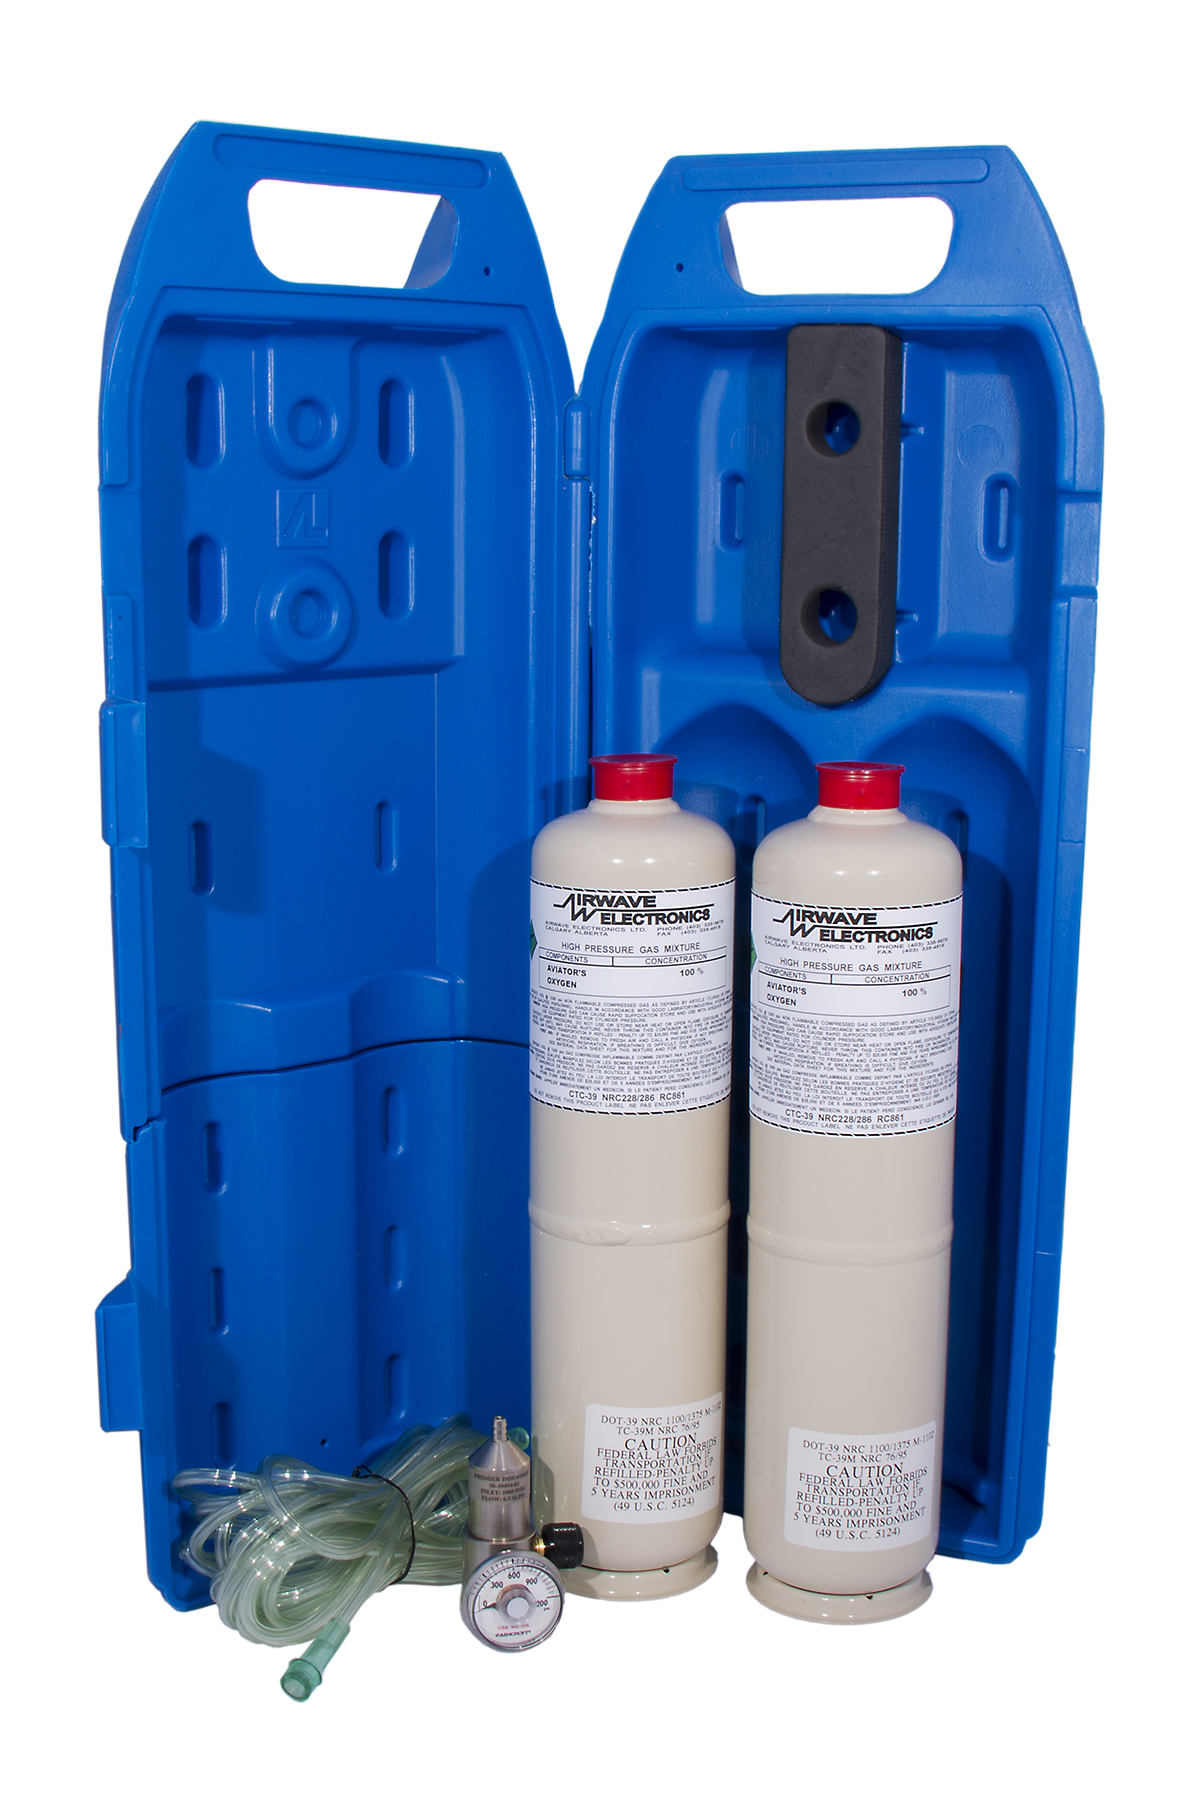 aviation oxygen kit, aviation safety supplies